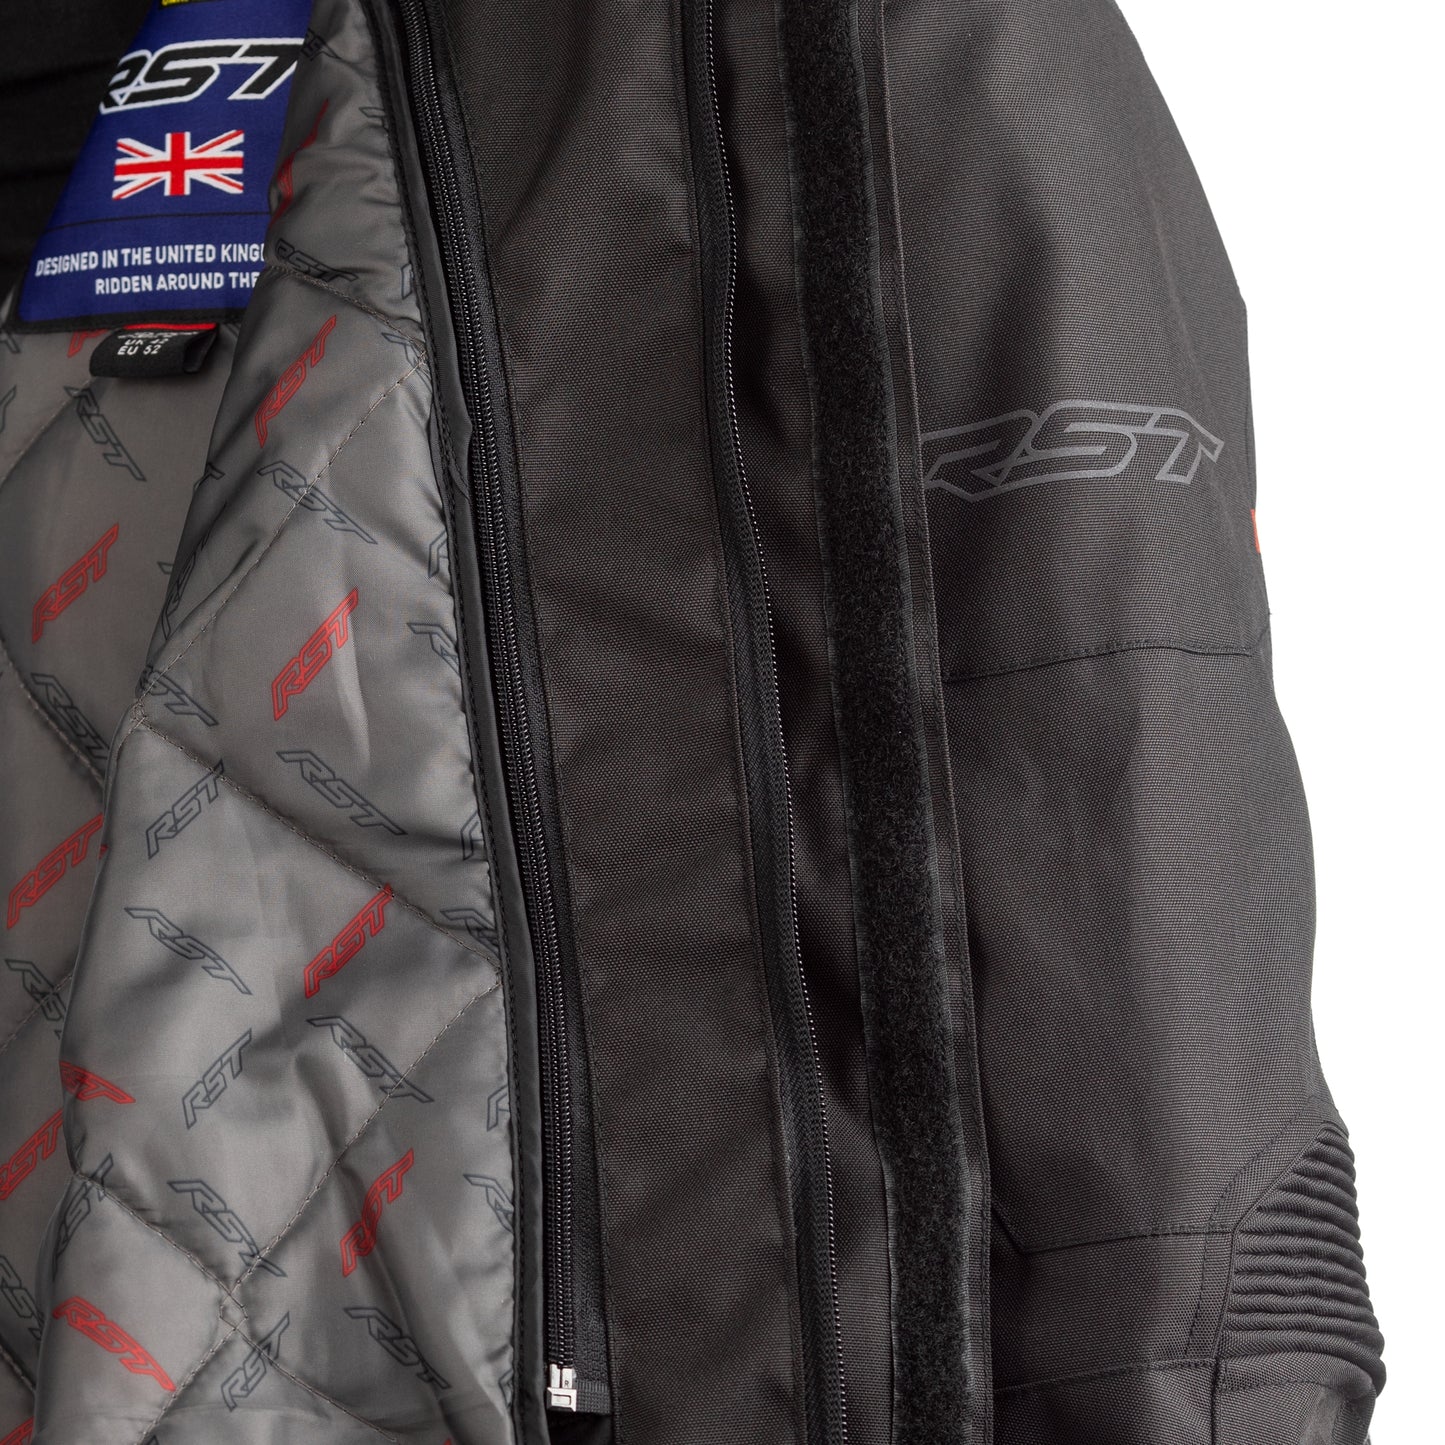 RST Atlas CE Men's Waterproof Textile Jacket - Black (2366)